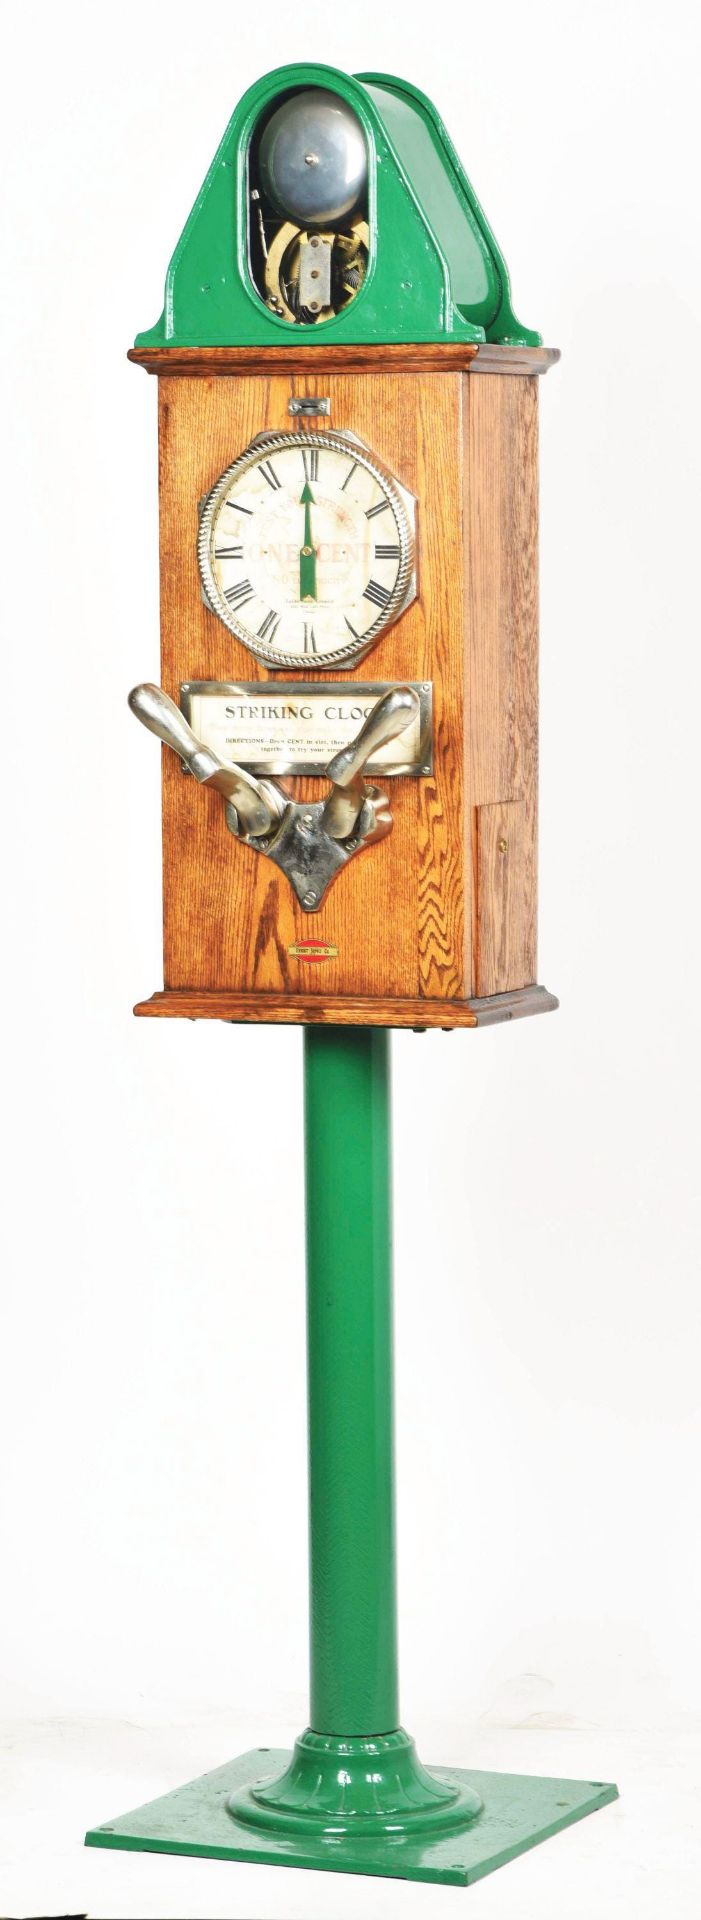 1¢ Striking Clock Mechanical Strength Tester Arcade - Image 3 of 6